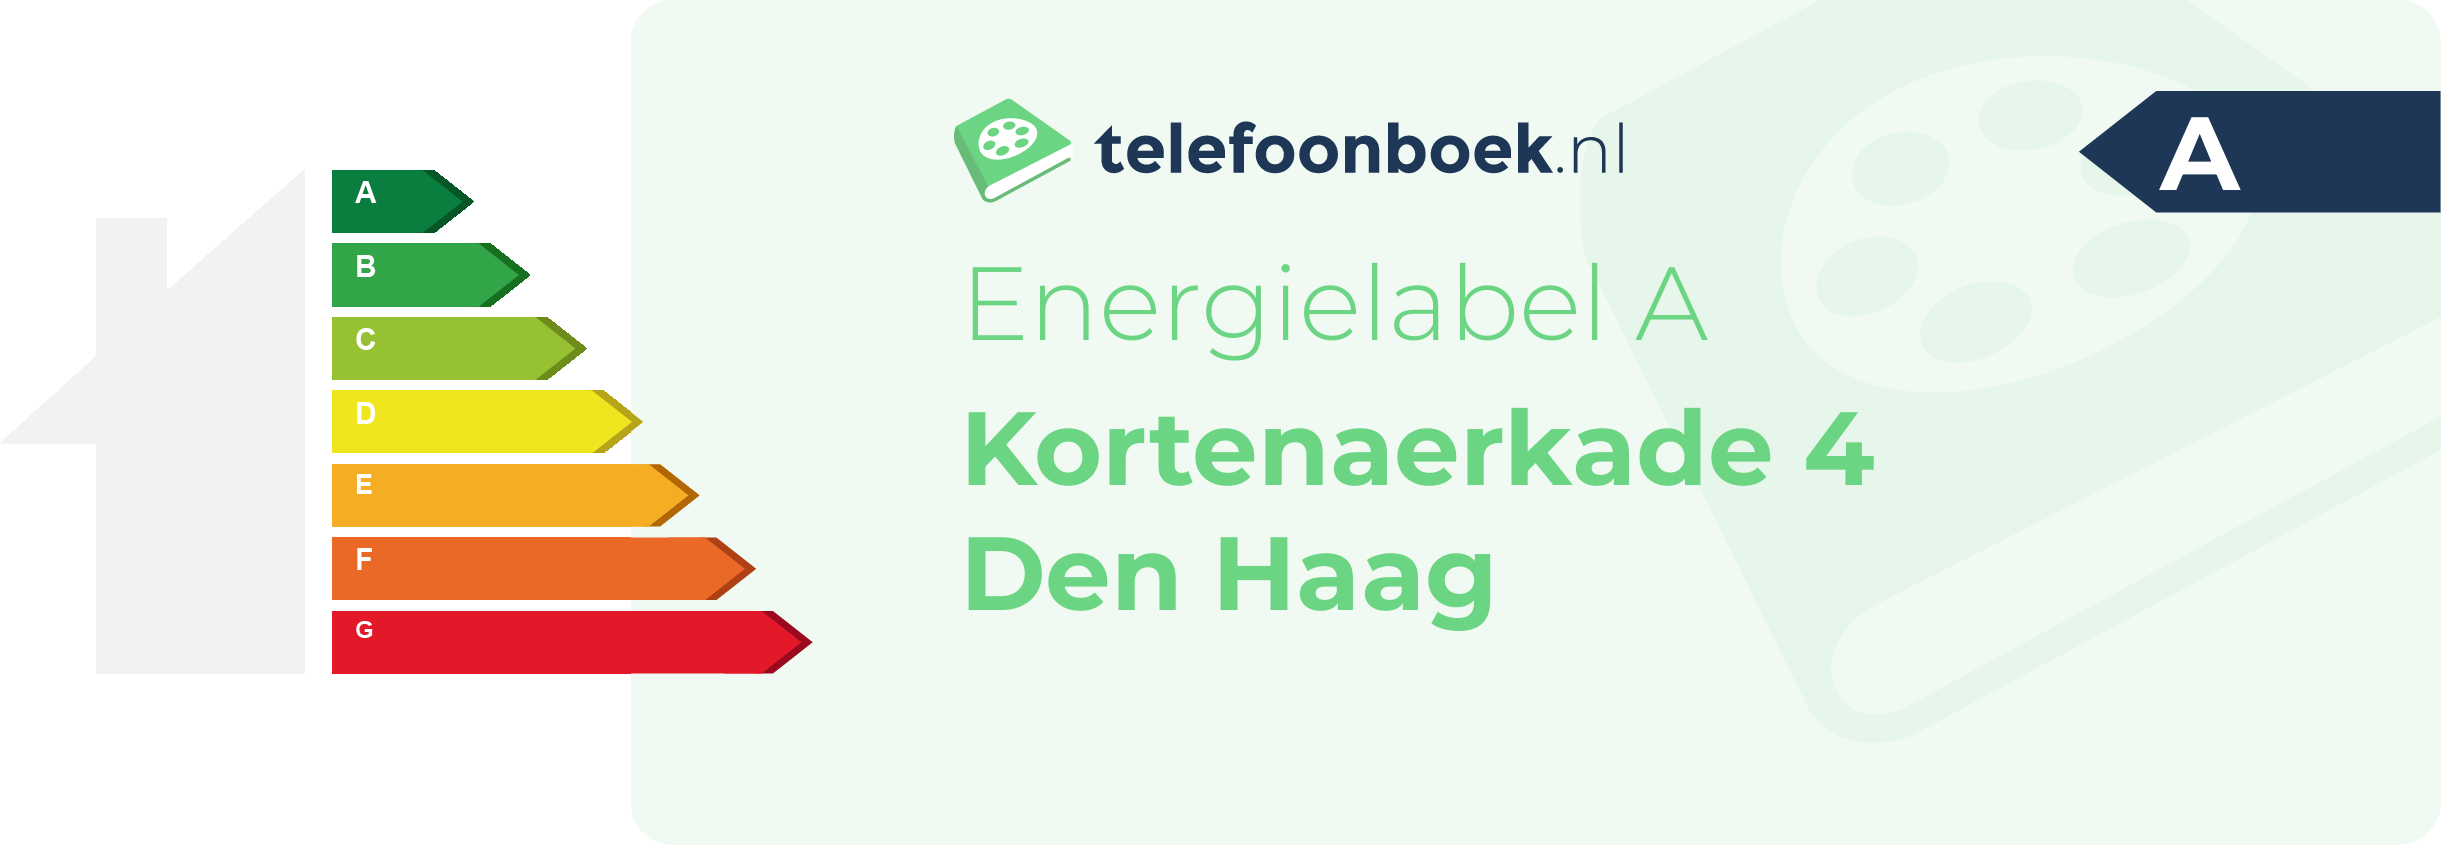 Energielabel Kortenaerkade 4 Den Haag